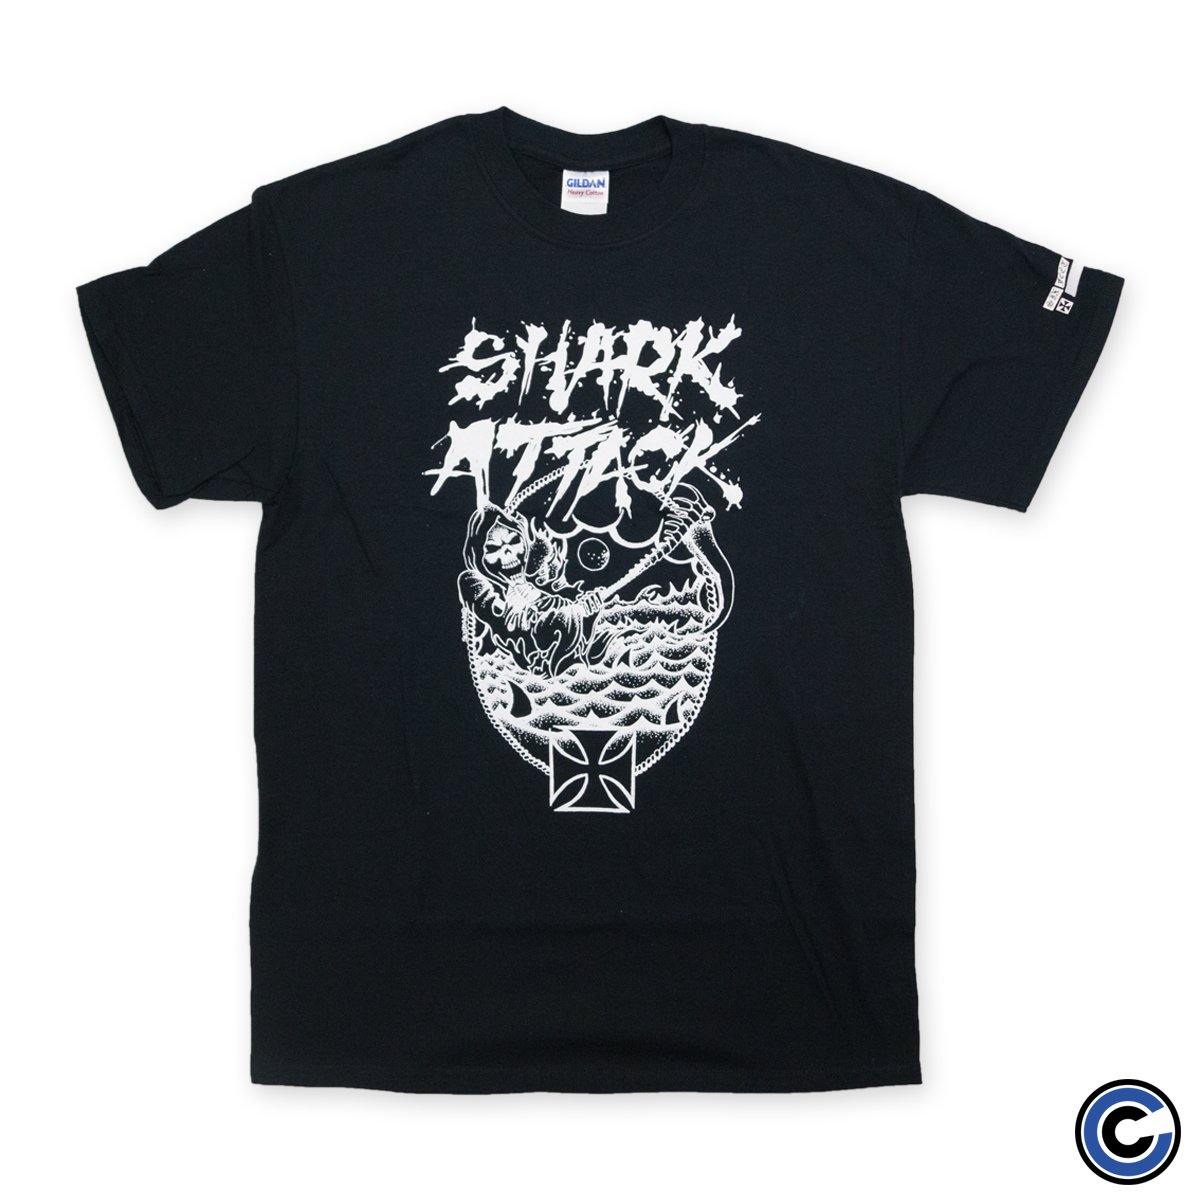 Buy – Shark Attack "Grim Reaper" Shirt – Band & Music Merch – Cold Cuts Merch